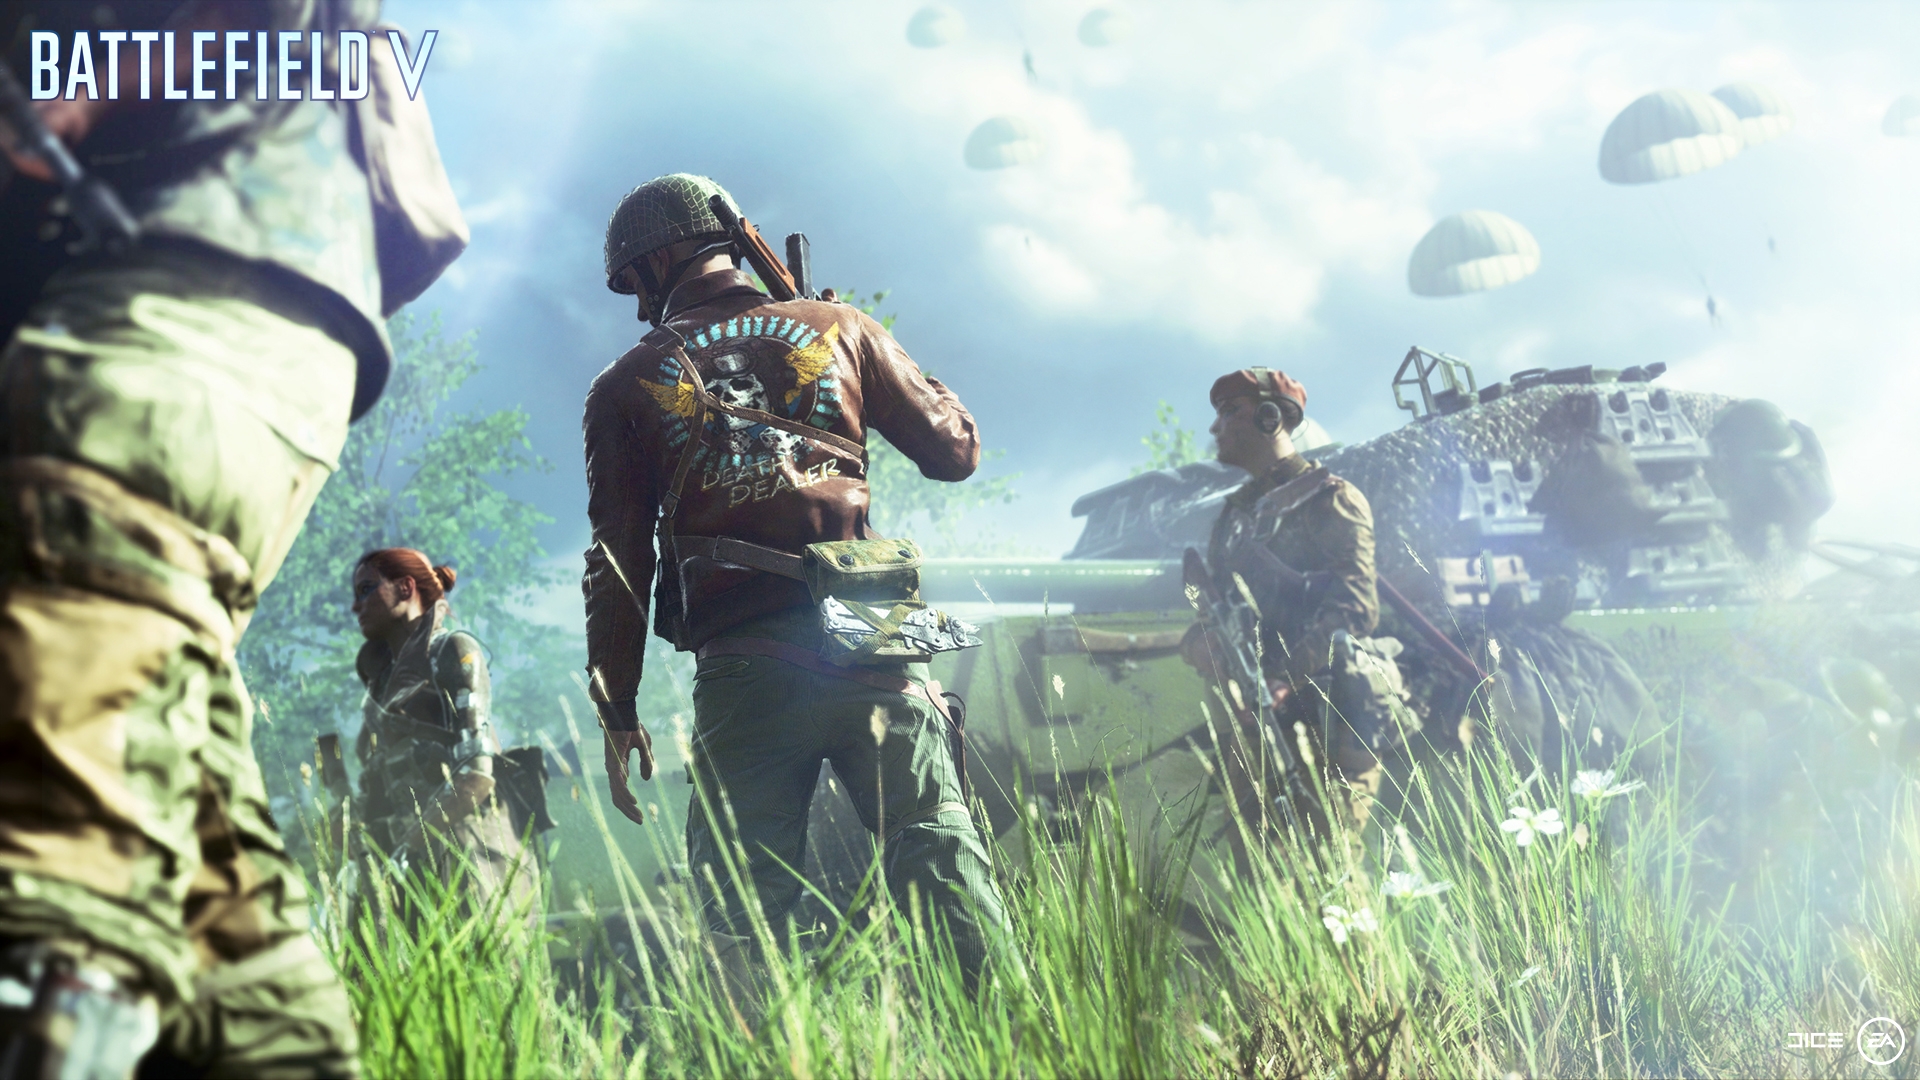 Battlefield 5 Screenshots #4 - Bild: EA